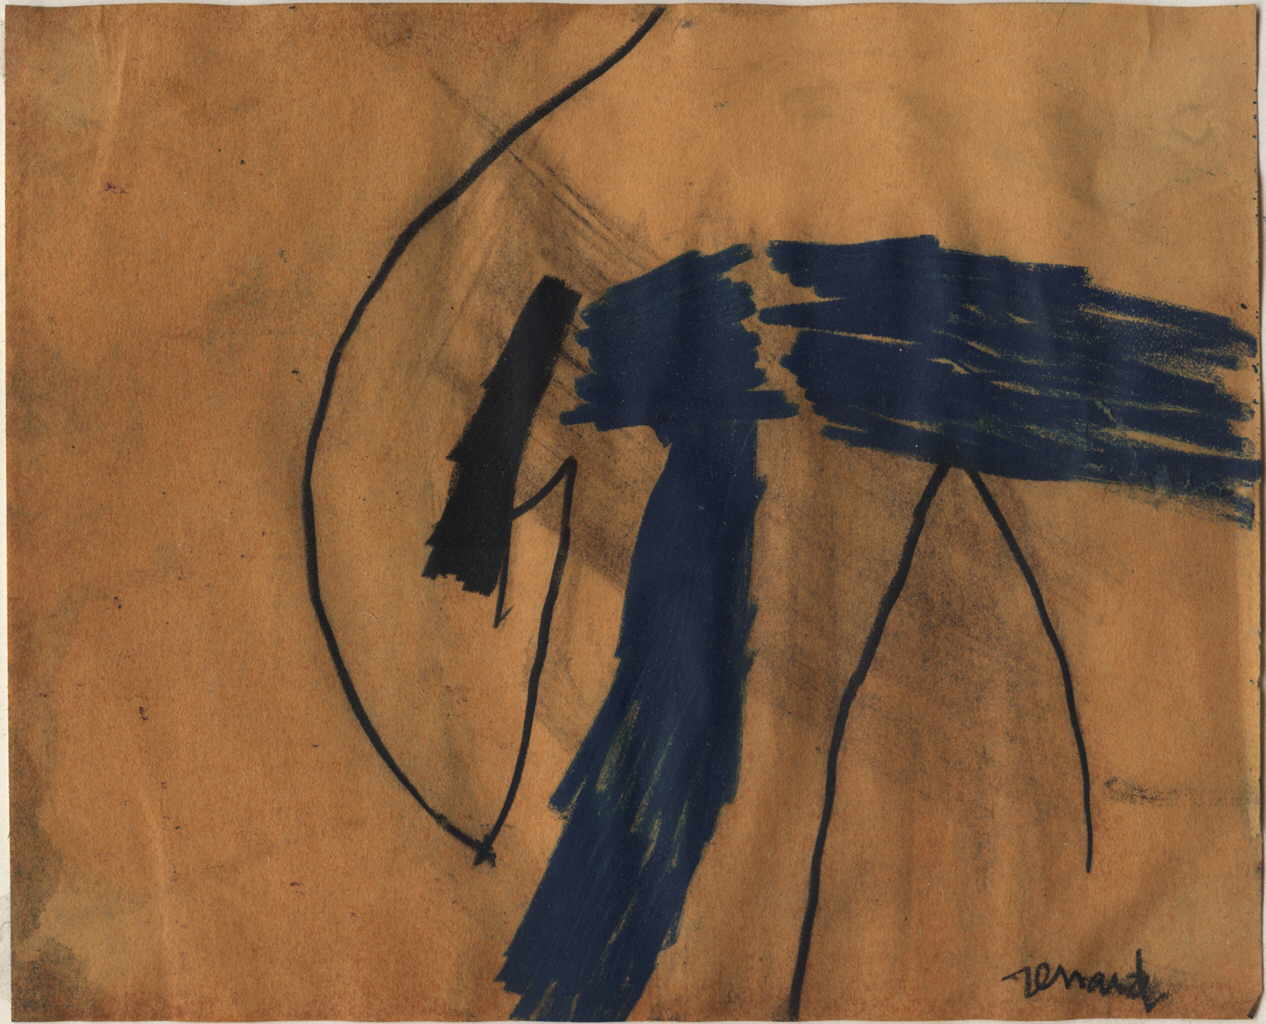 Renard Emmanuelle 
untitled, 1990
mixed media / paper
17 x 21 cm